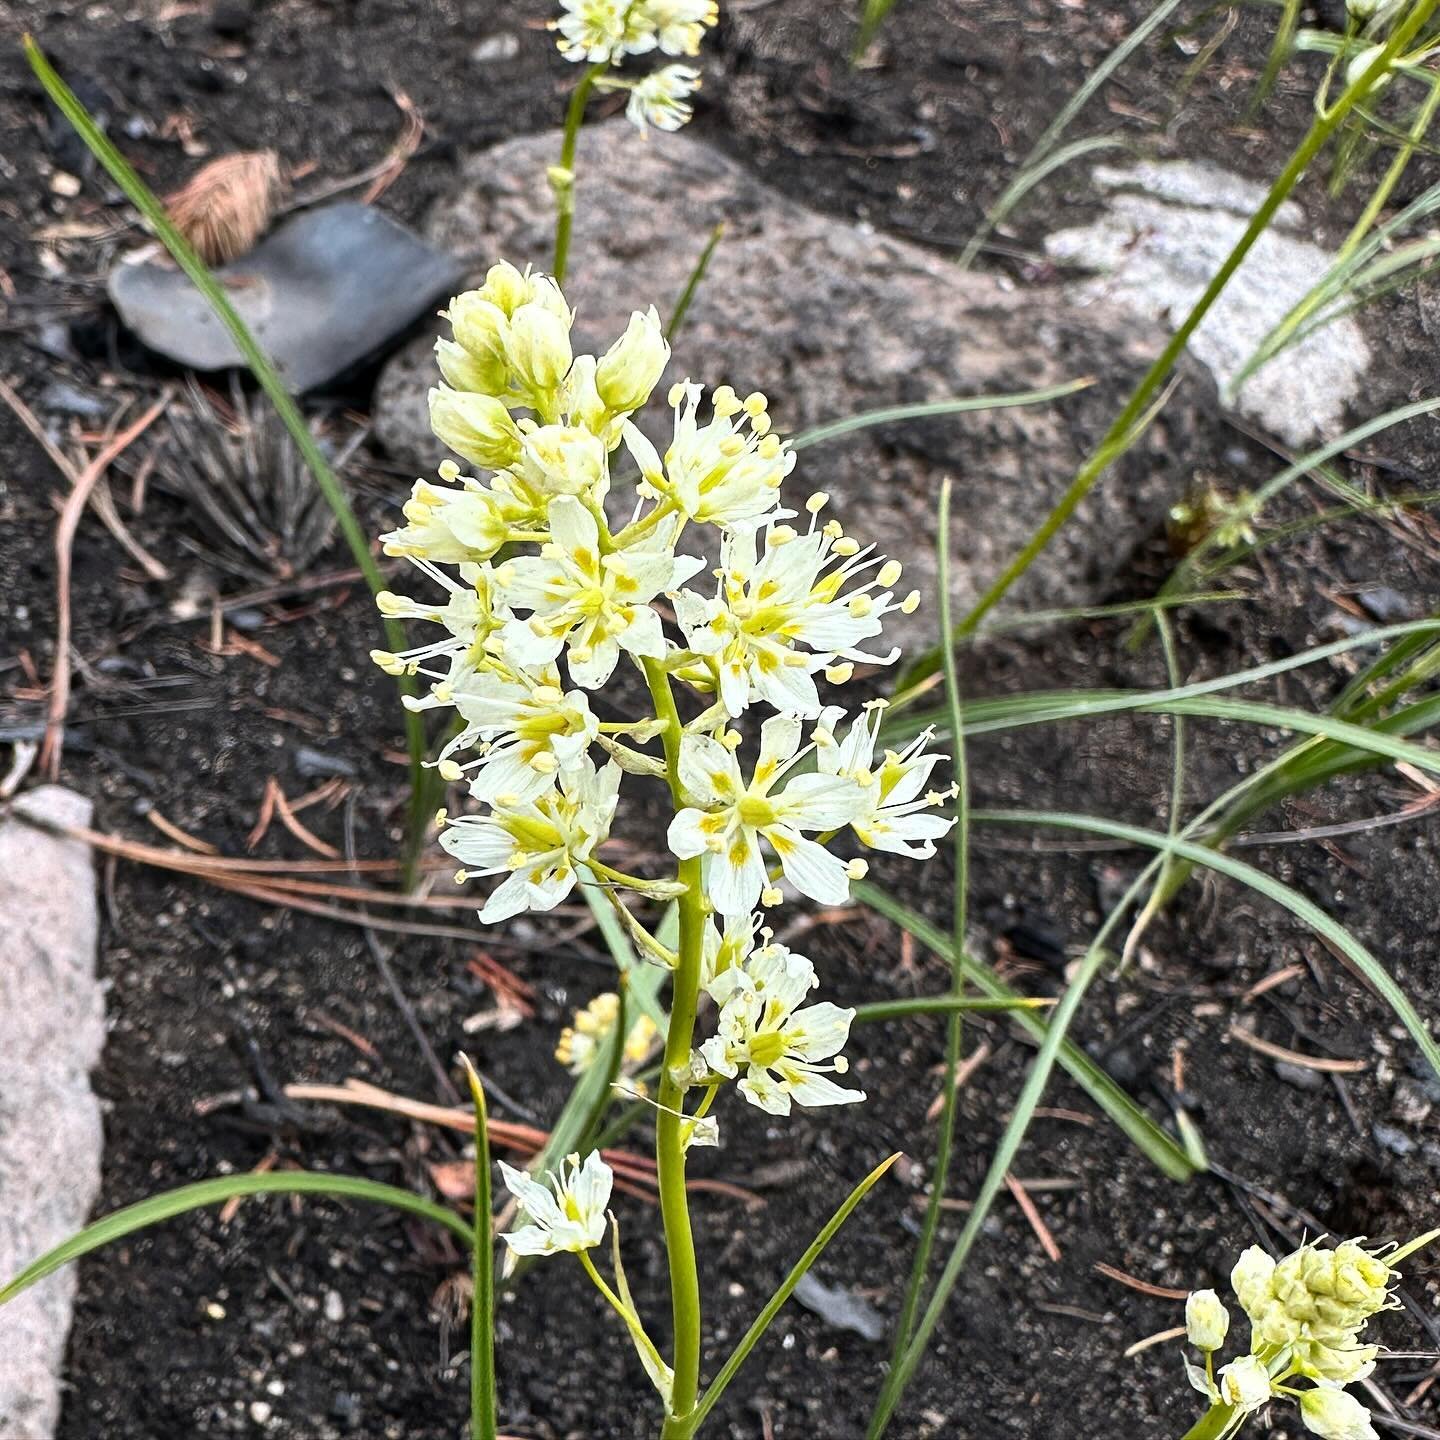 Death Camas have come into bloom in the wildfire area. So many of them! Zigadenus venenosus var. gramineus.